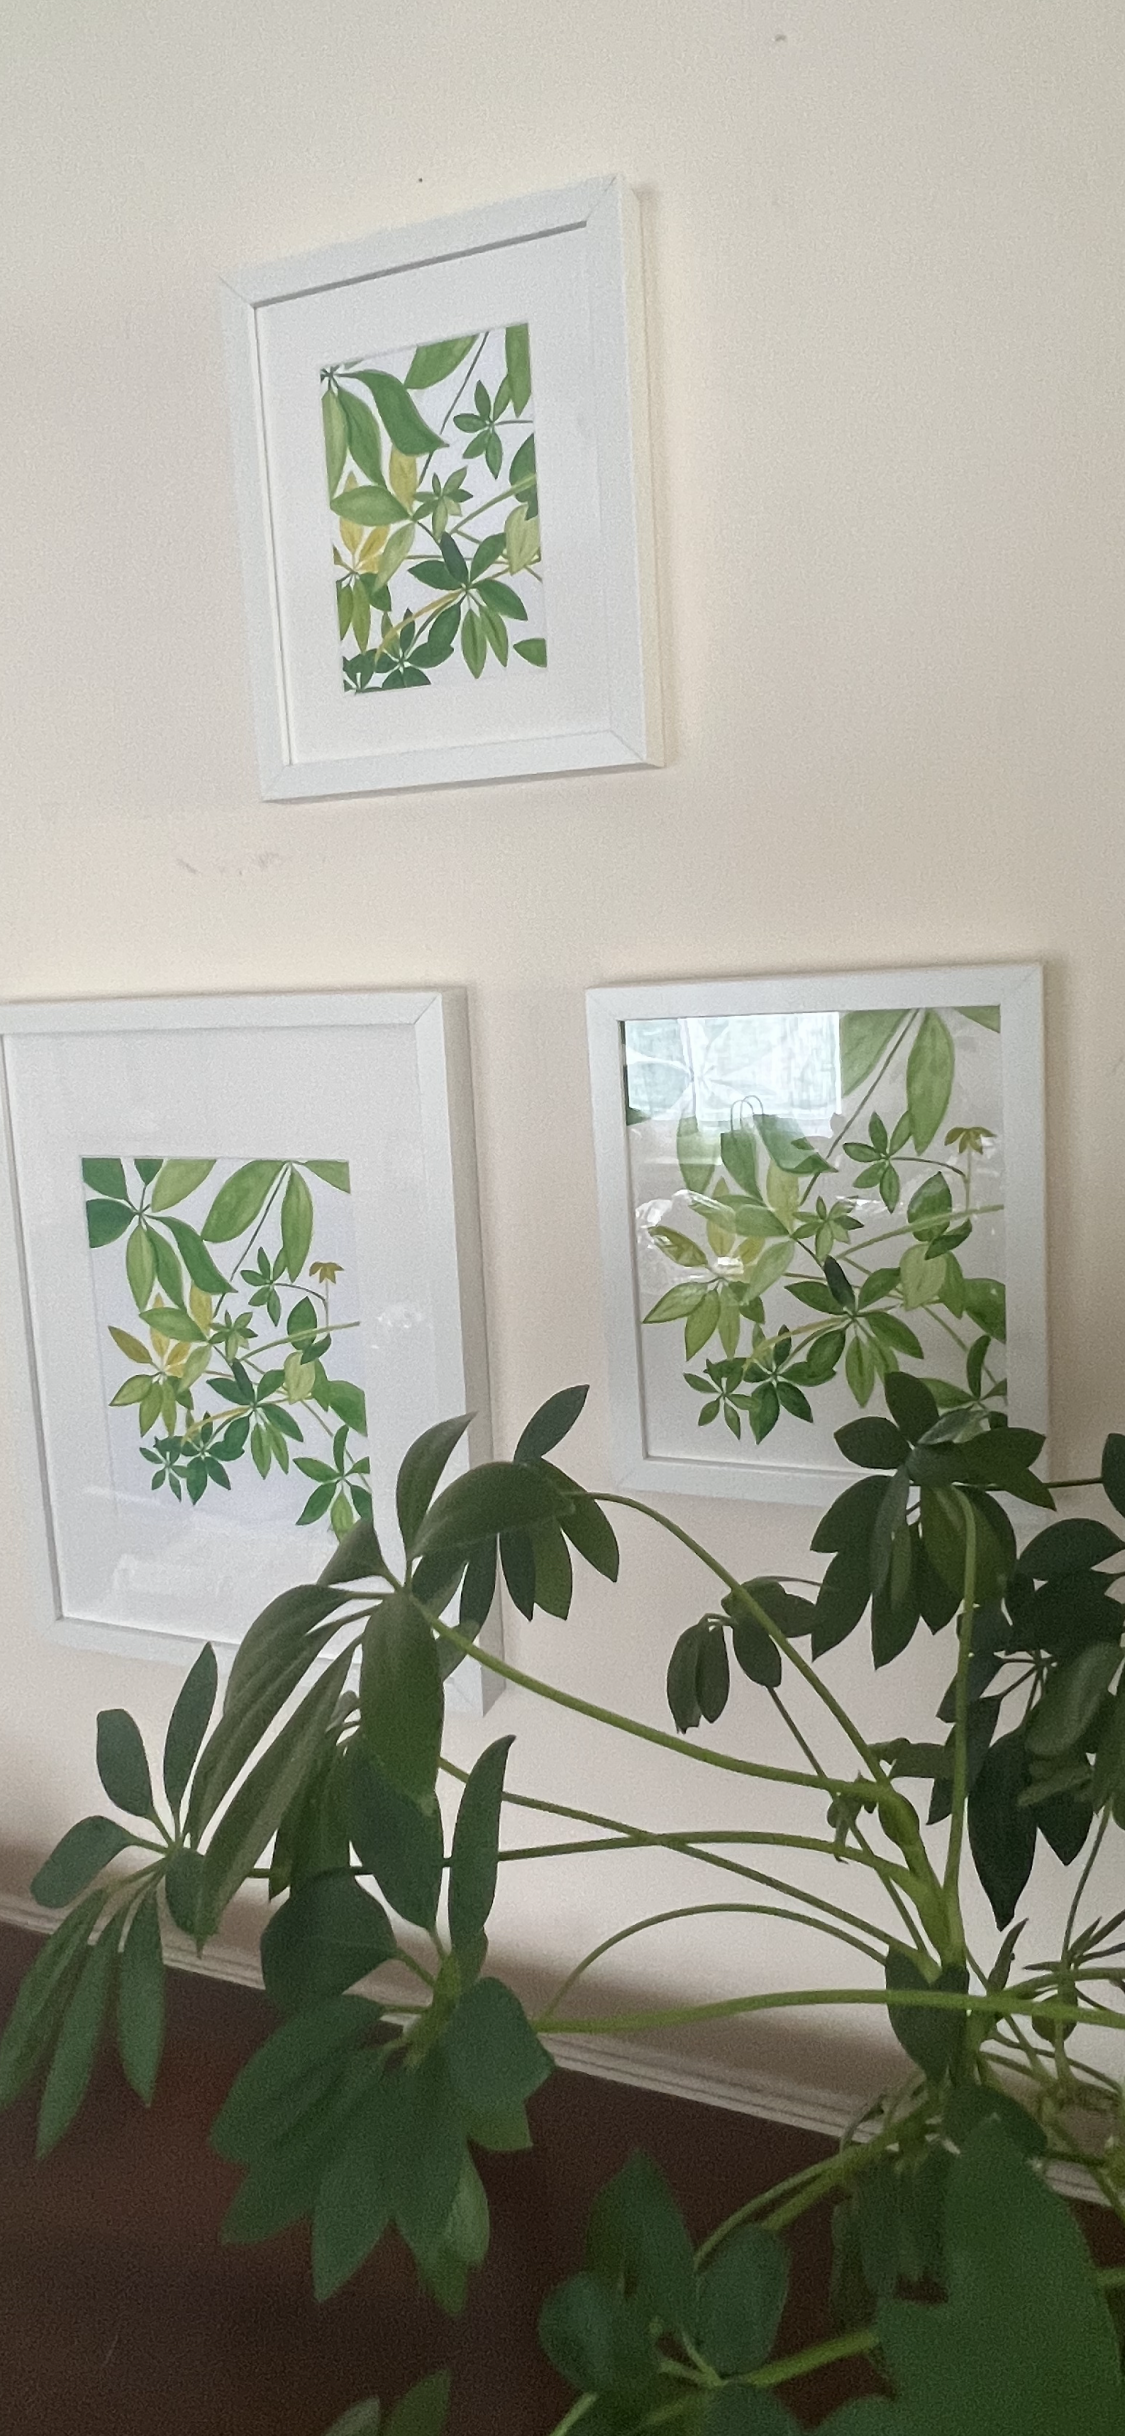 Scheflerra “Umbrella” plant, watercolor print on paper. Size 8 by 10 inches.